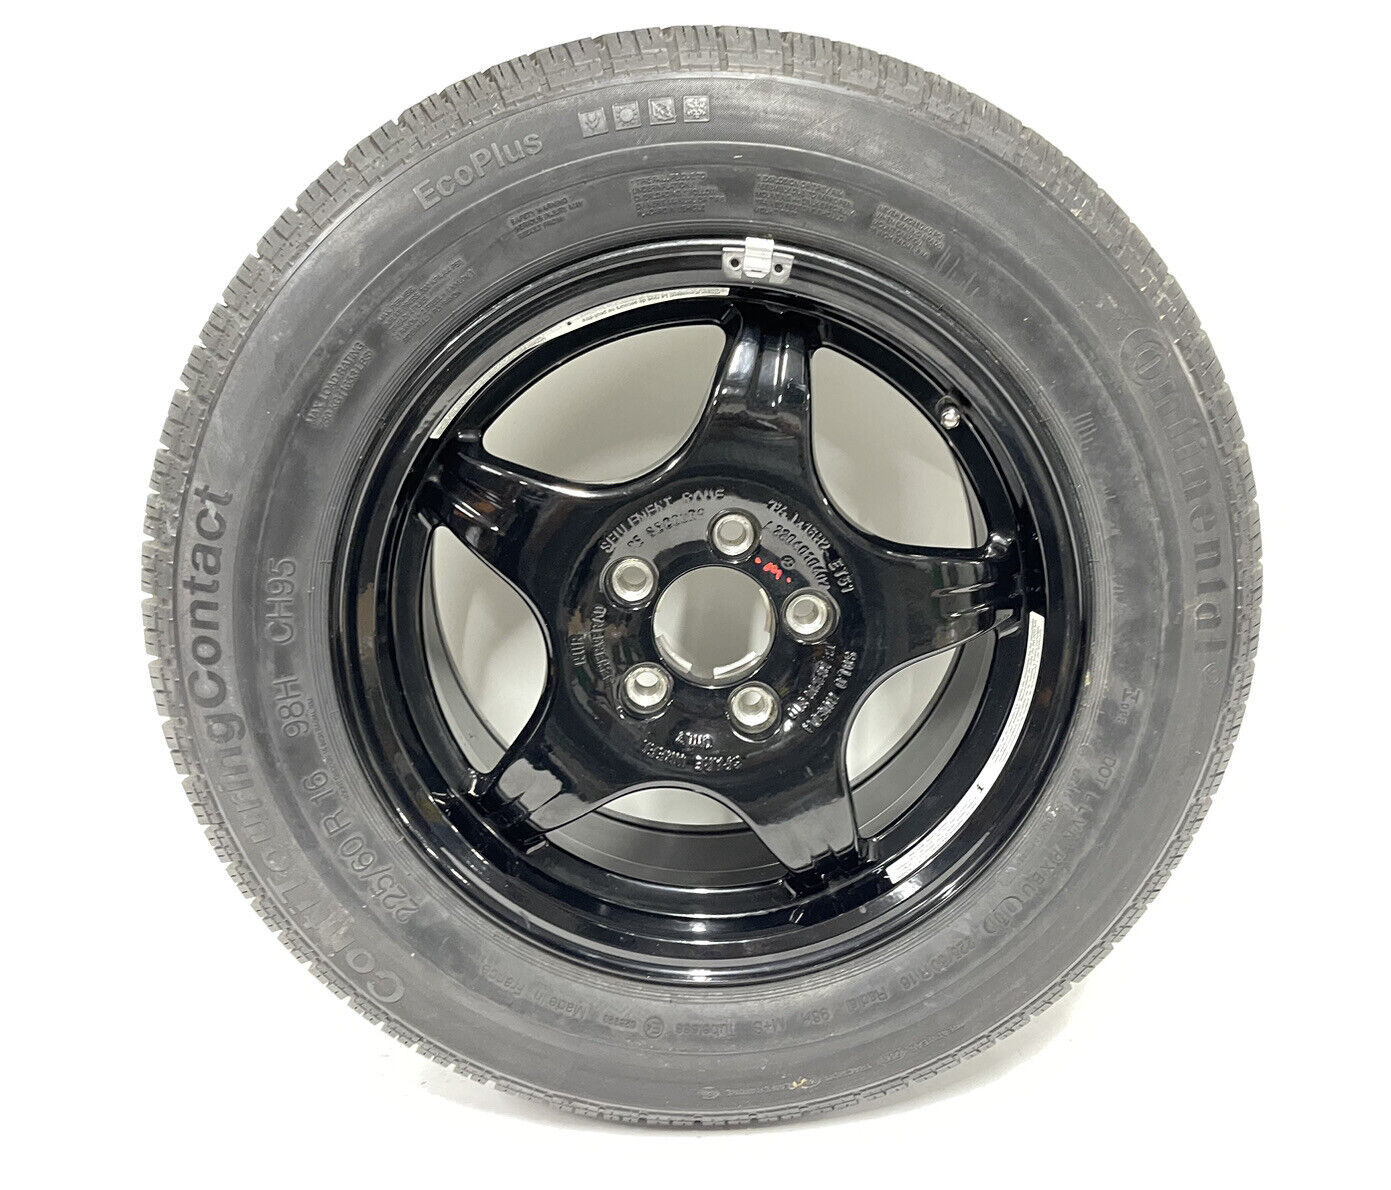 00-06 Mercedes W220 S430 S500 Emergency Spare Tire Wheel Rim R16 2204010402 OEM